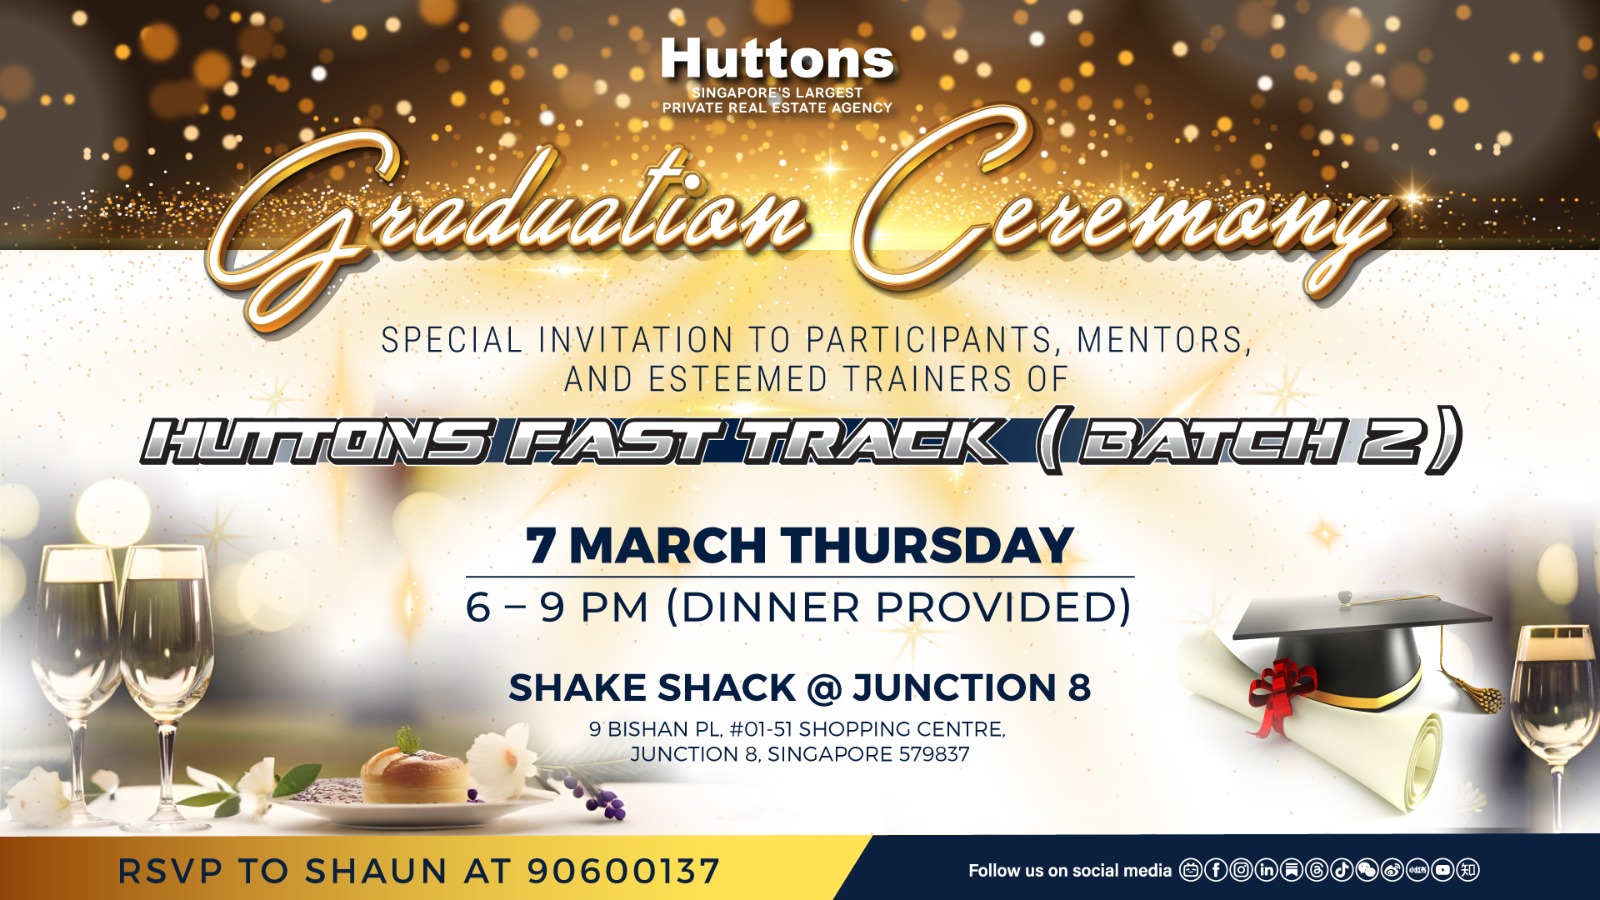 Huttons Fast Track Graduation Ceremony (Batch 2)